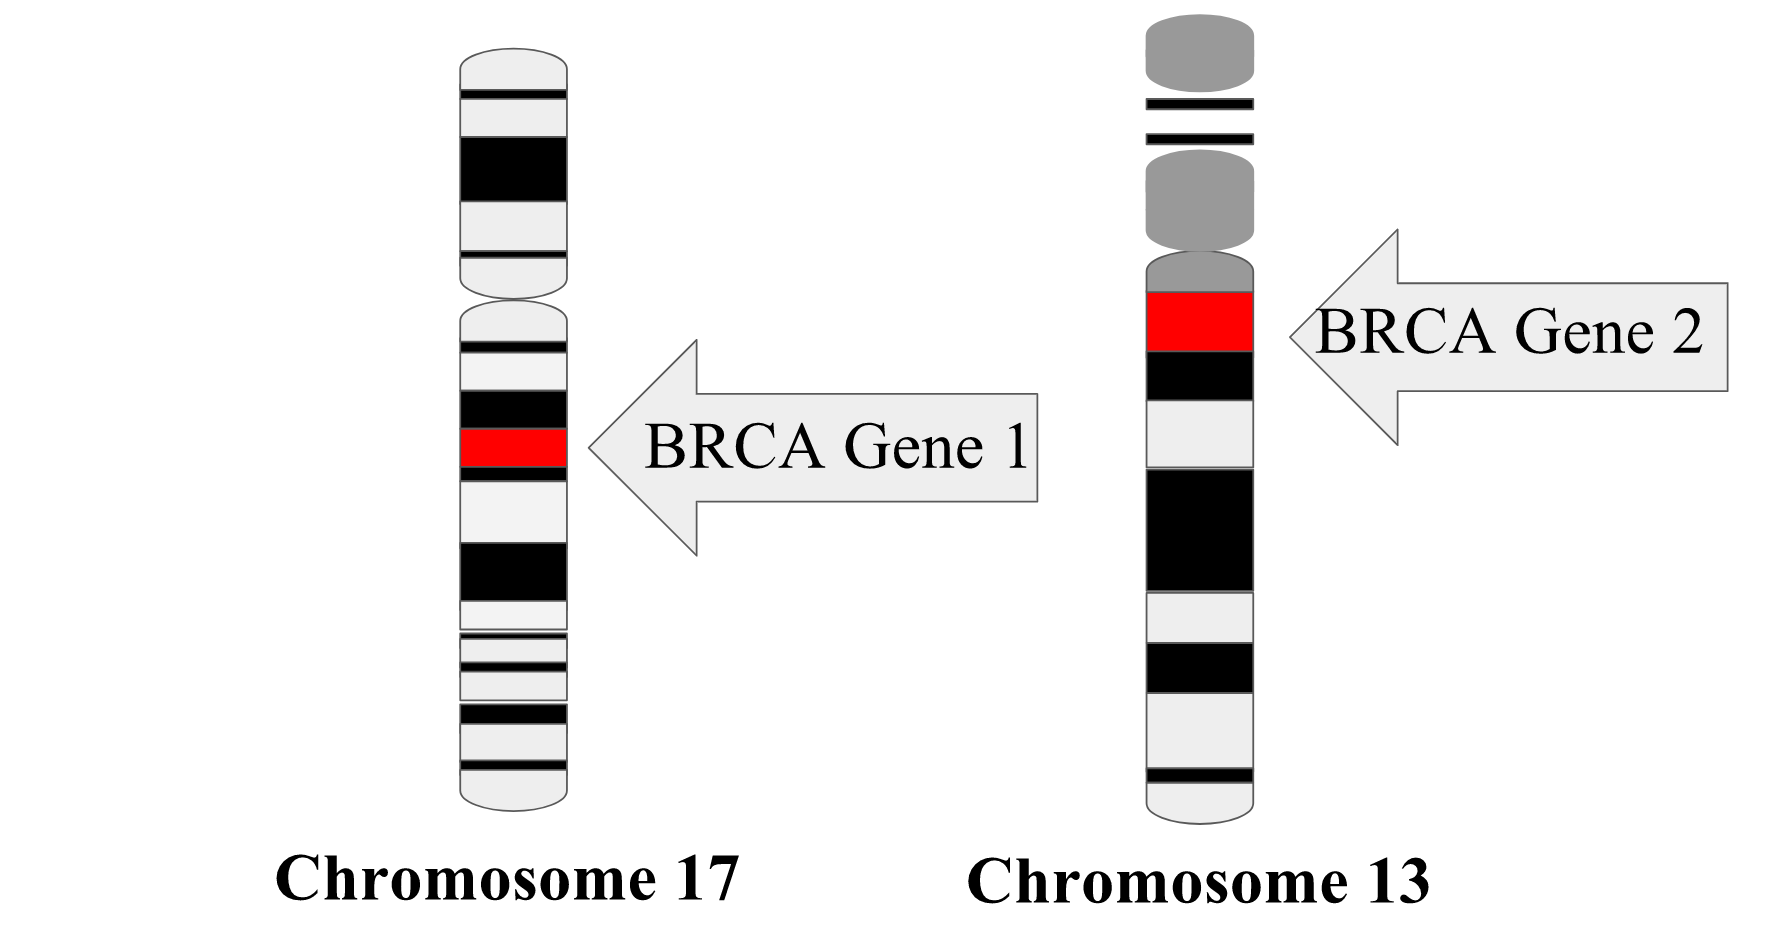 BRCA Genes